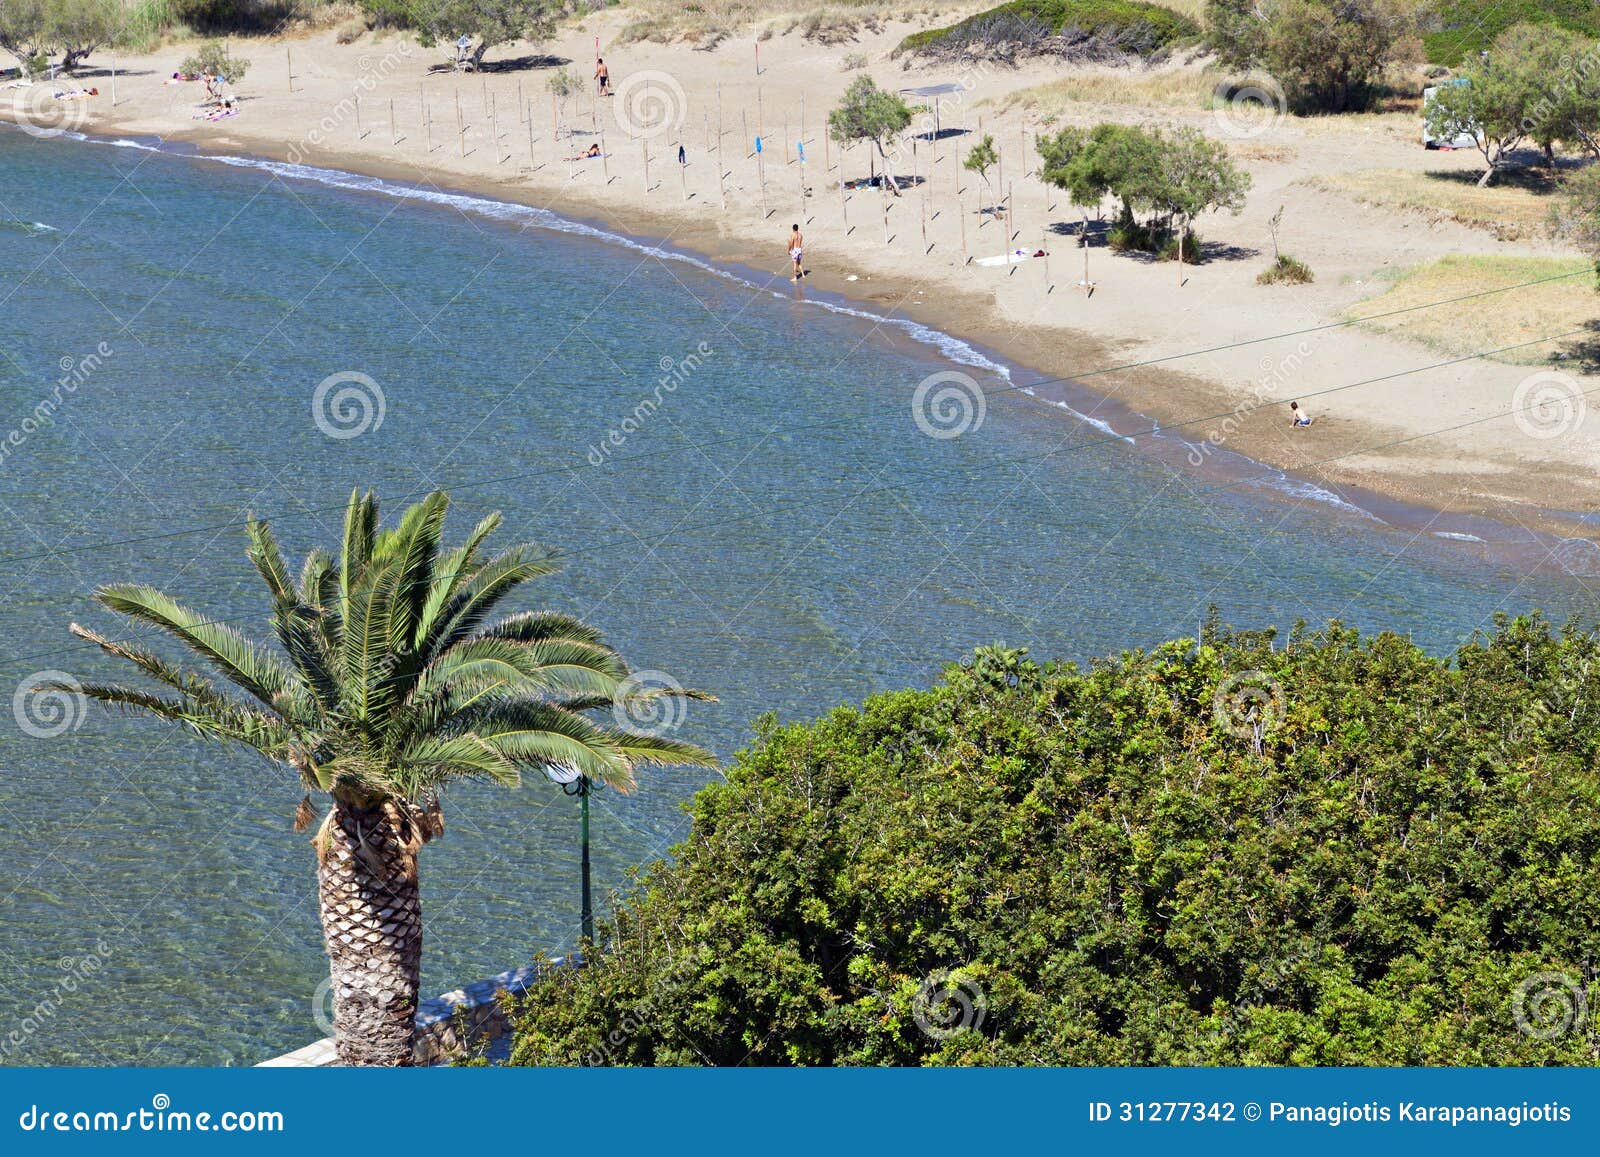 beach at syros island in greece